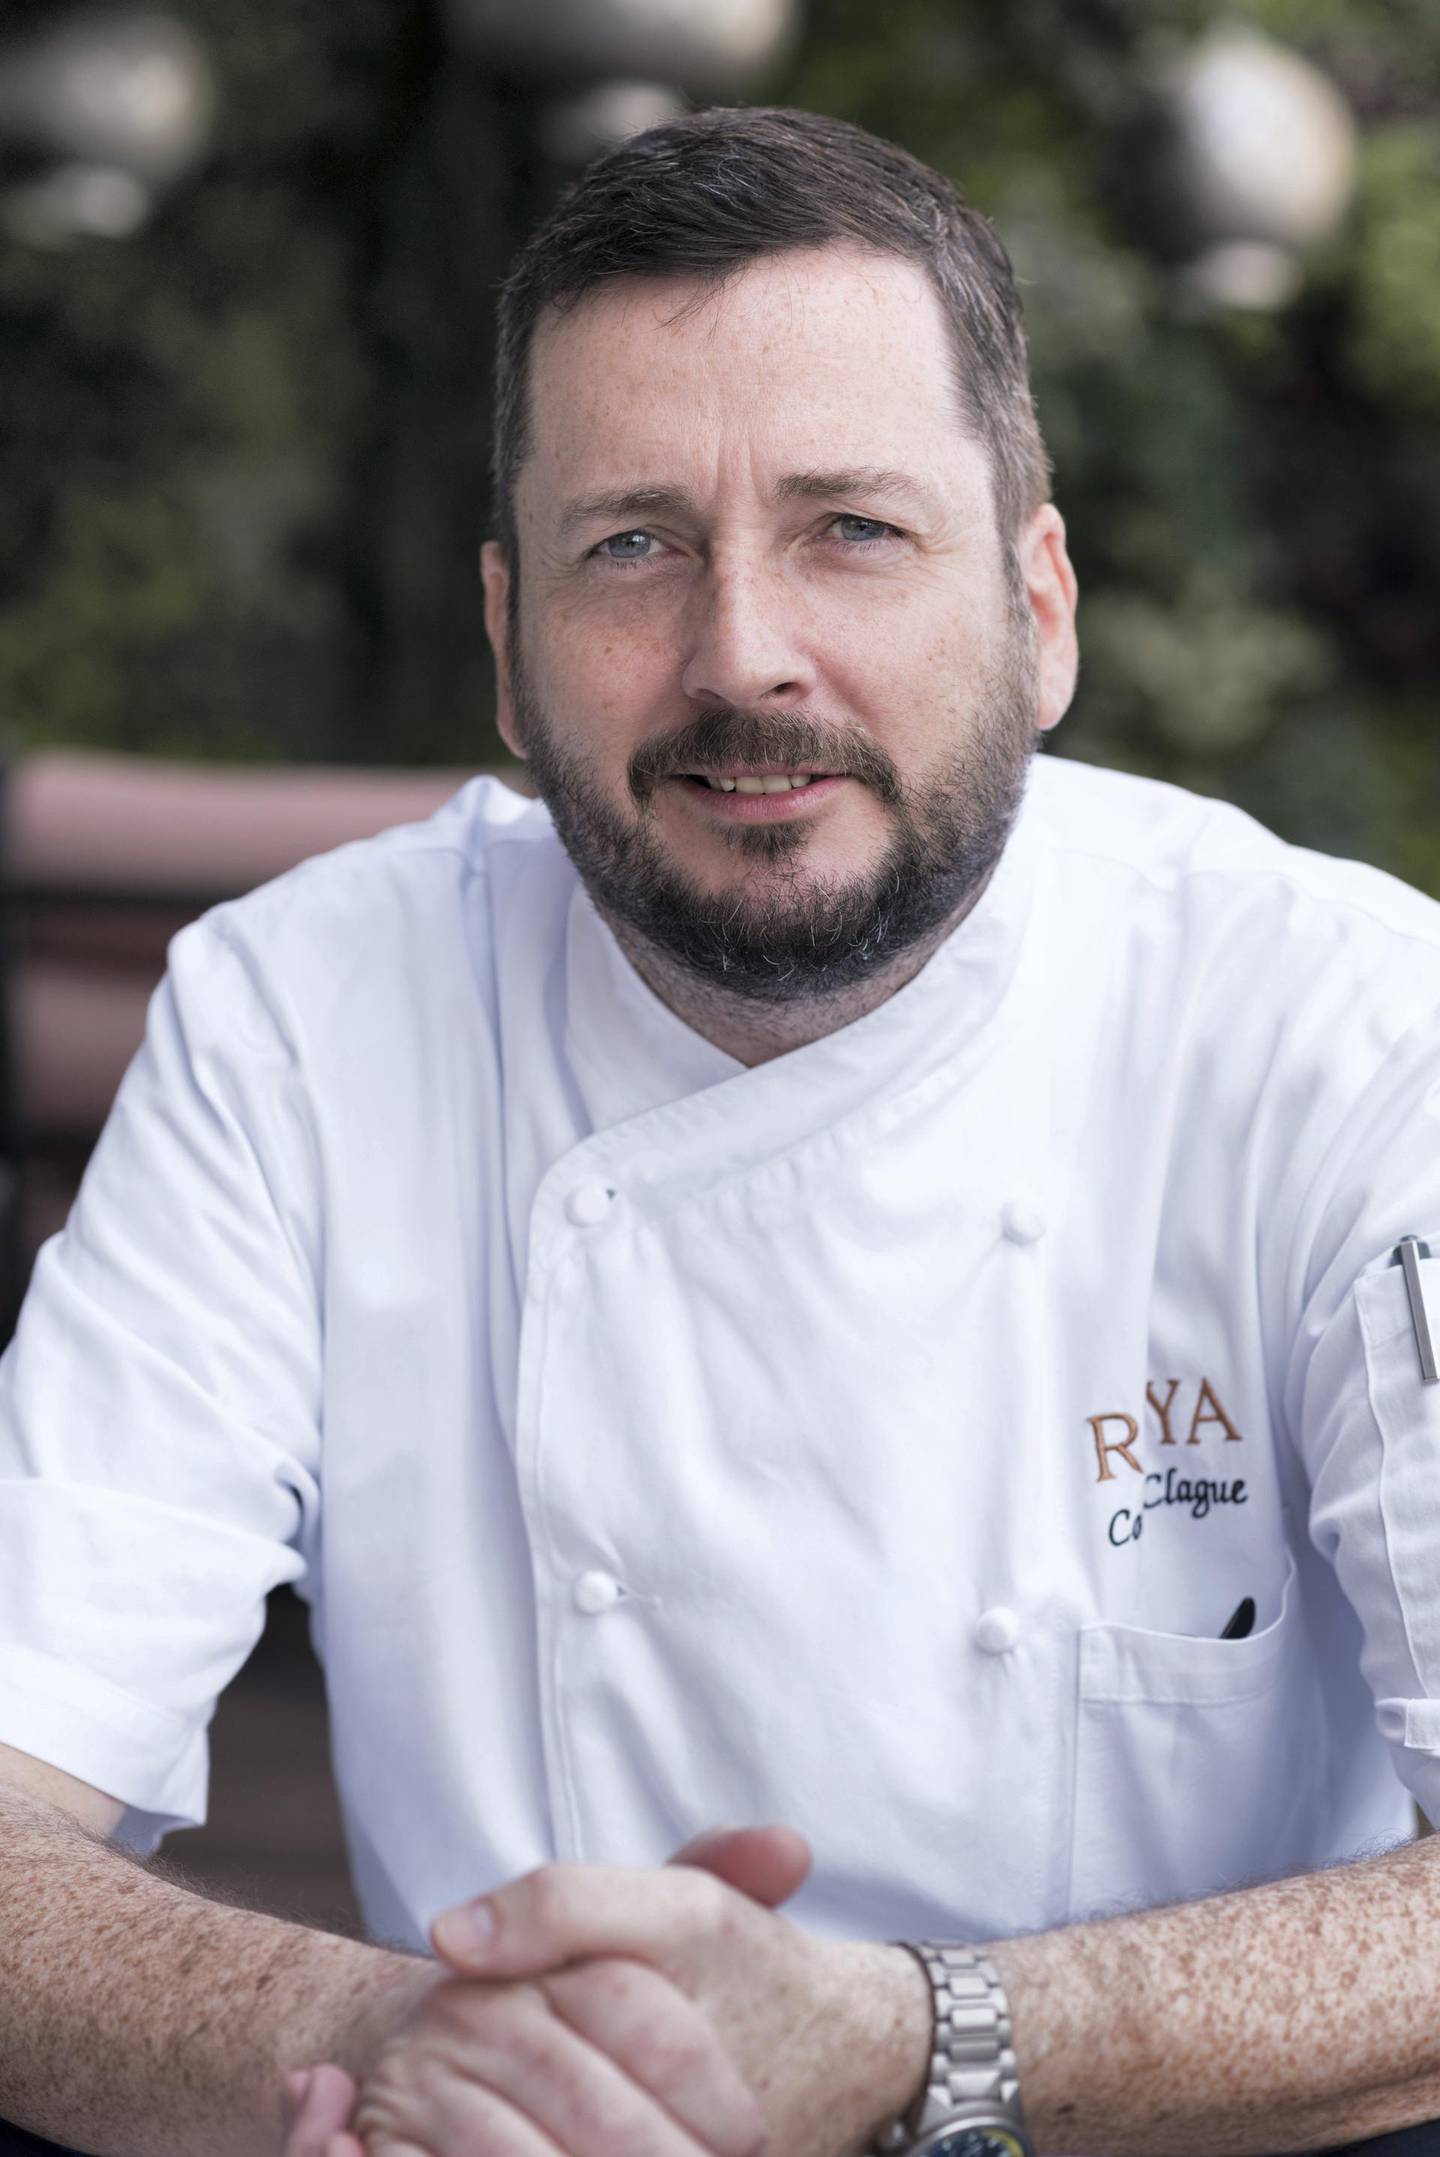 Colin Clague is executive chef at Ruya Dubai